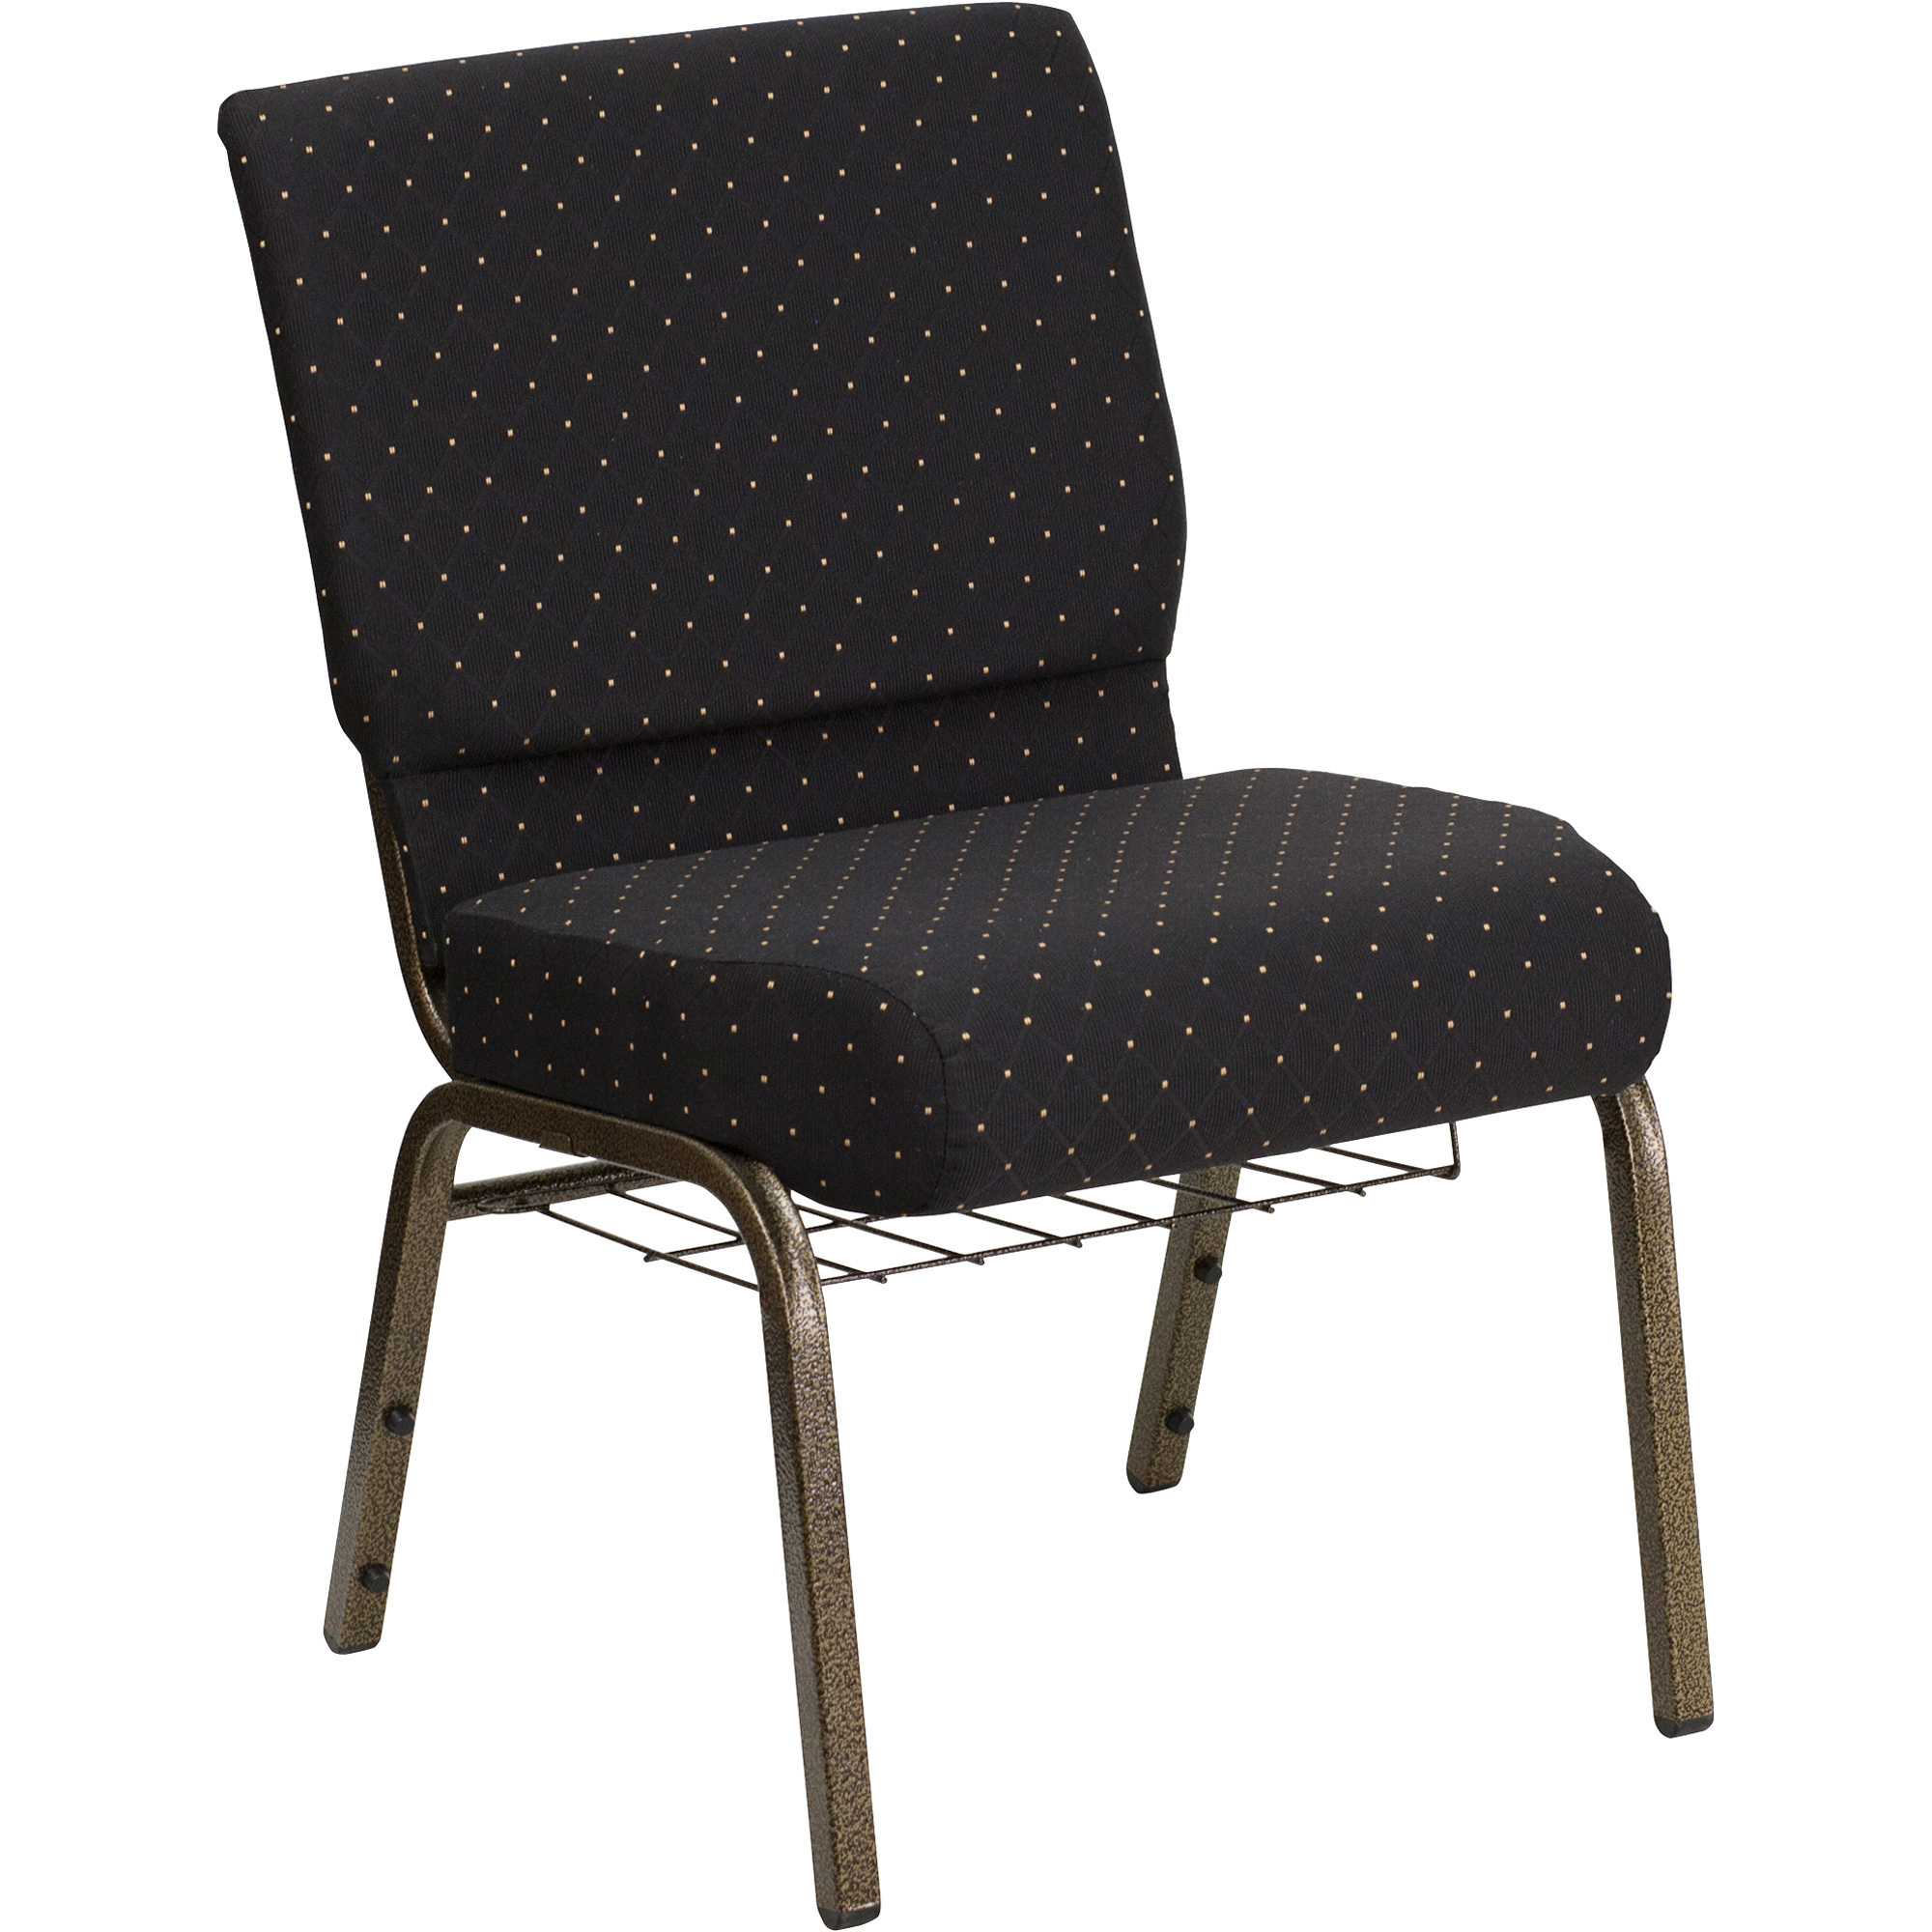 Flash Furniture Fabric Church Chair with Cup/Book Rack â Black Dot w/Gold Vein Frame, 21 1/4Inch W x 25Inch D x 33 1/4Inch H, Model FCH2214GV806B